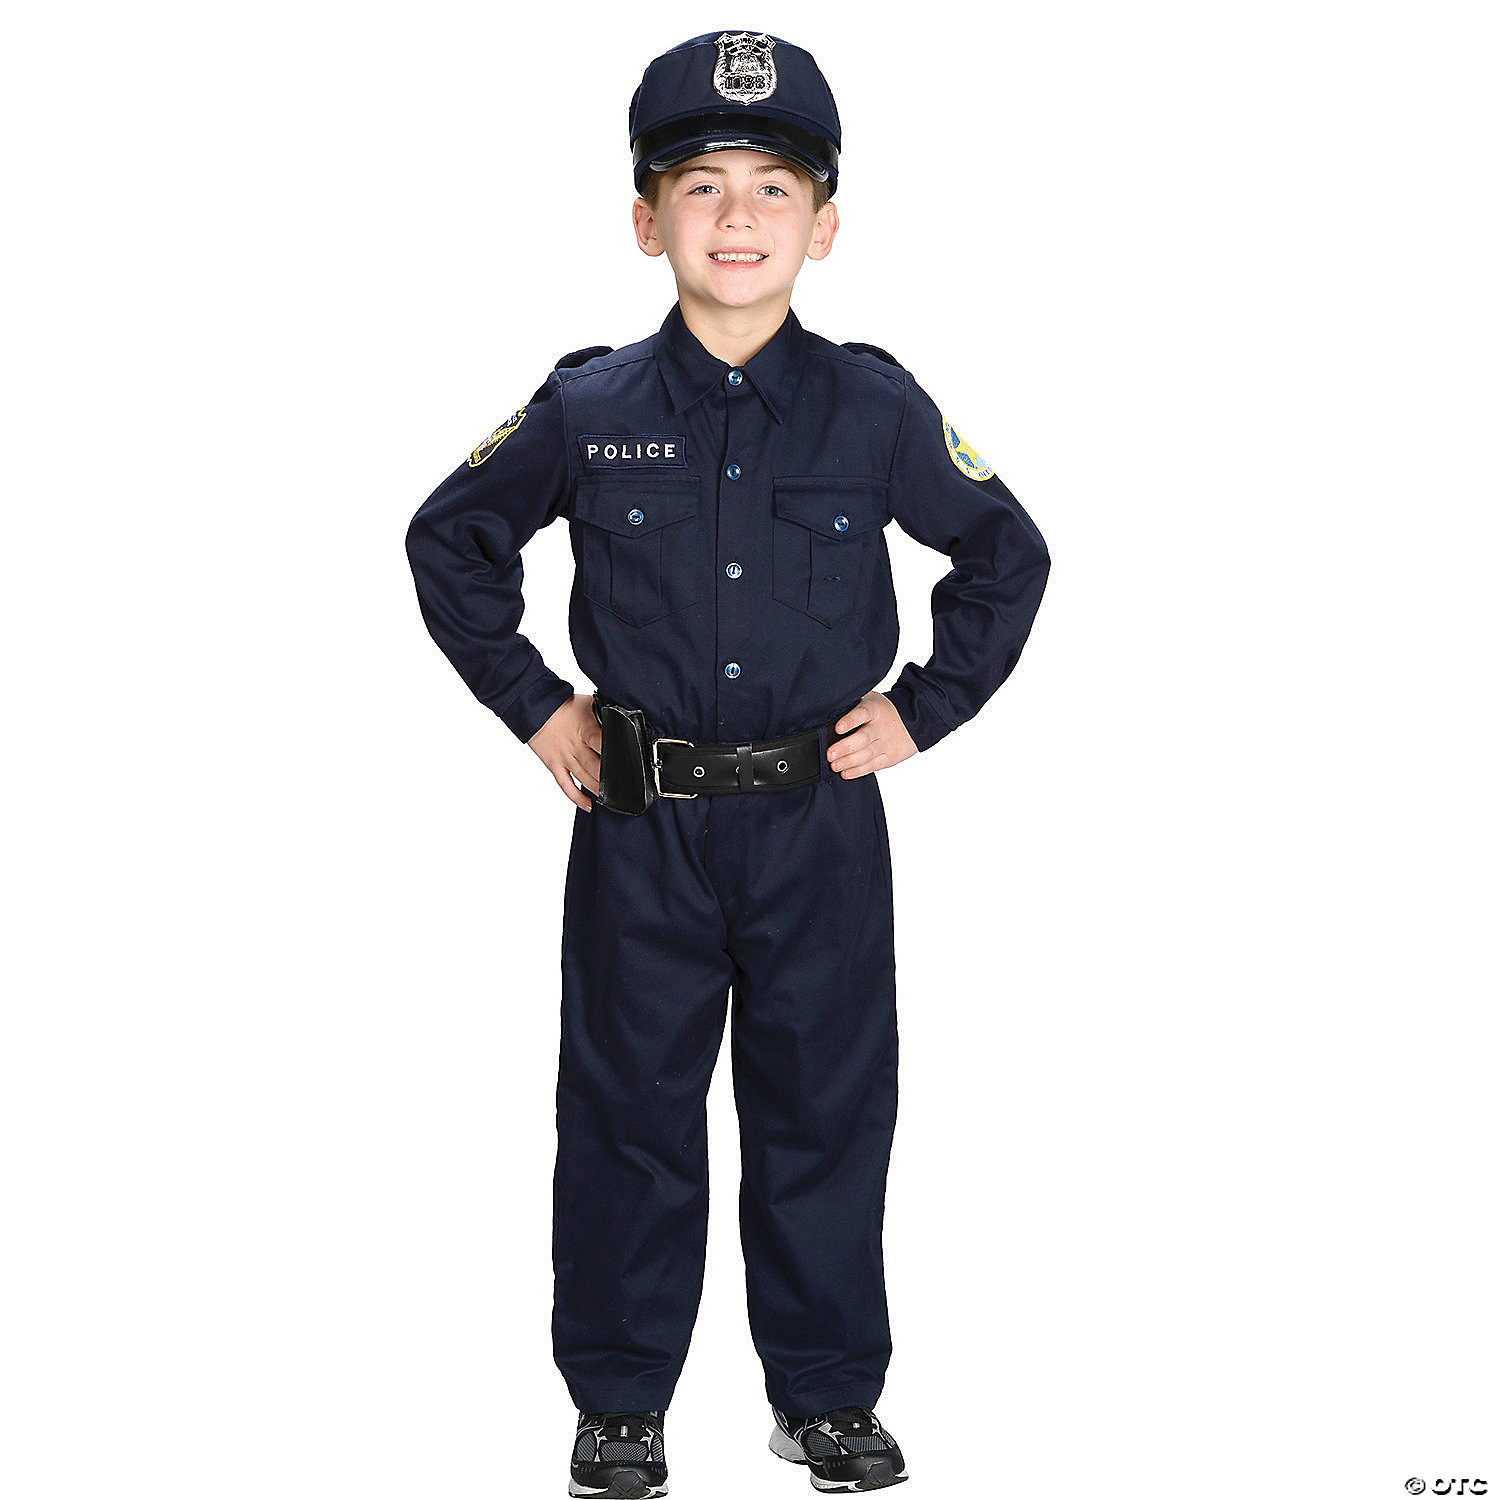 POLICE OFFICER CHILD 4-6 - HALLOWEEN